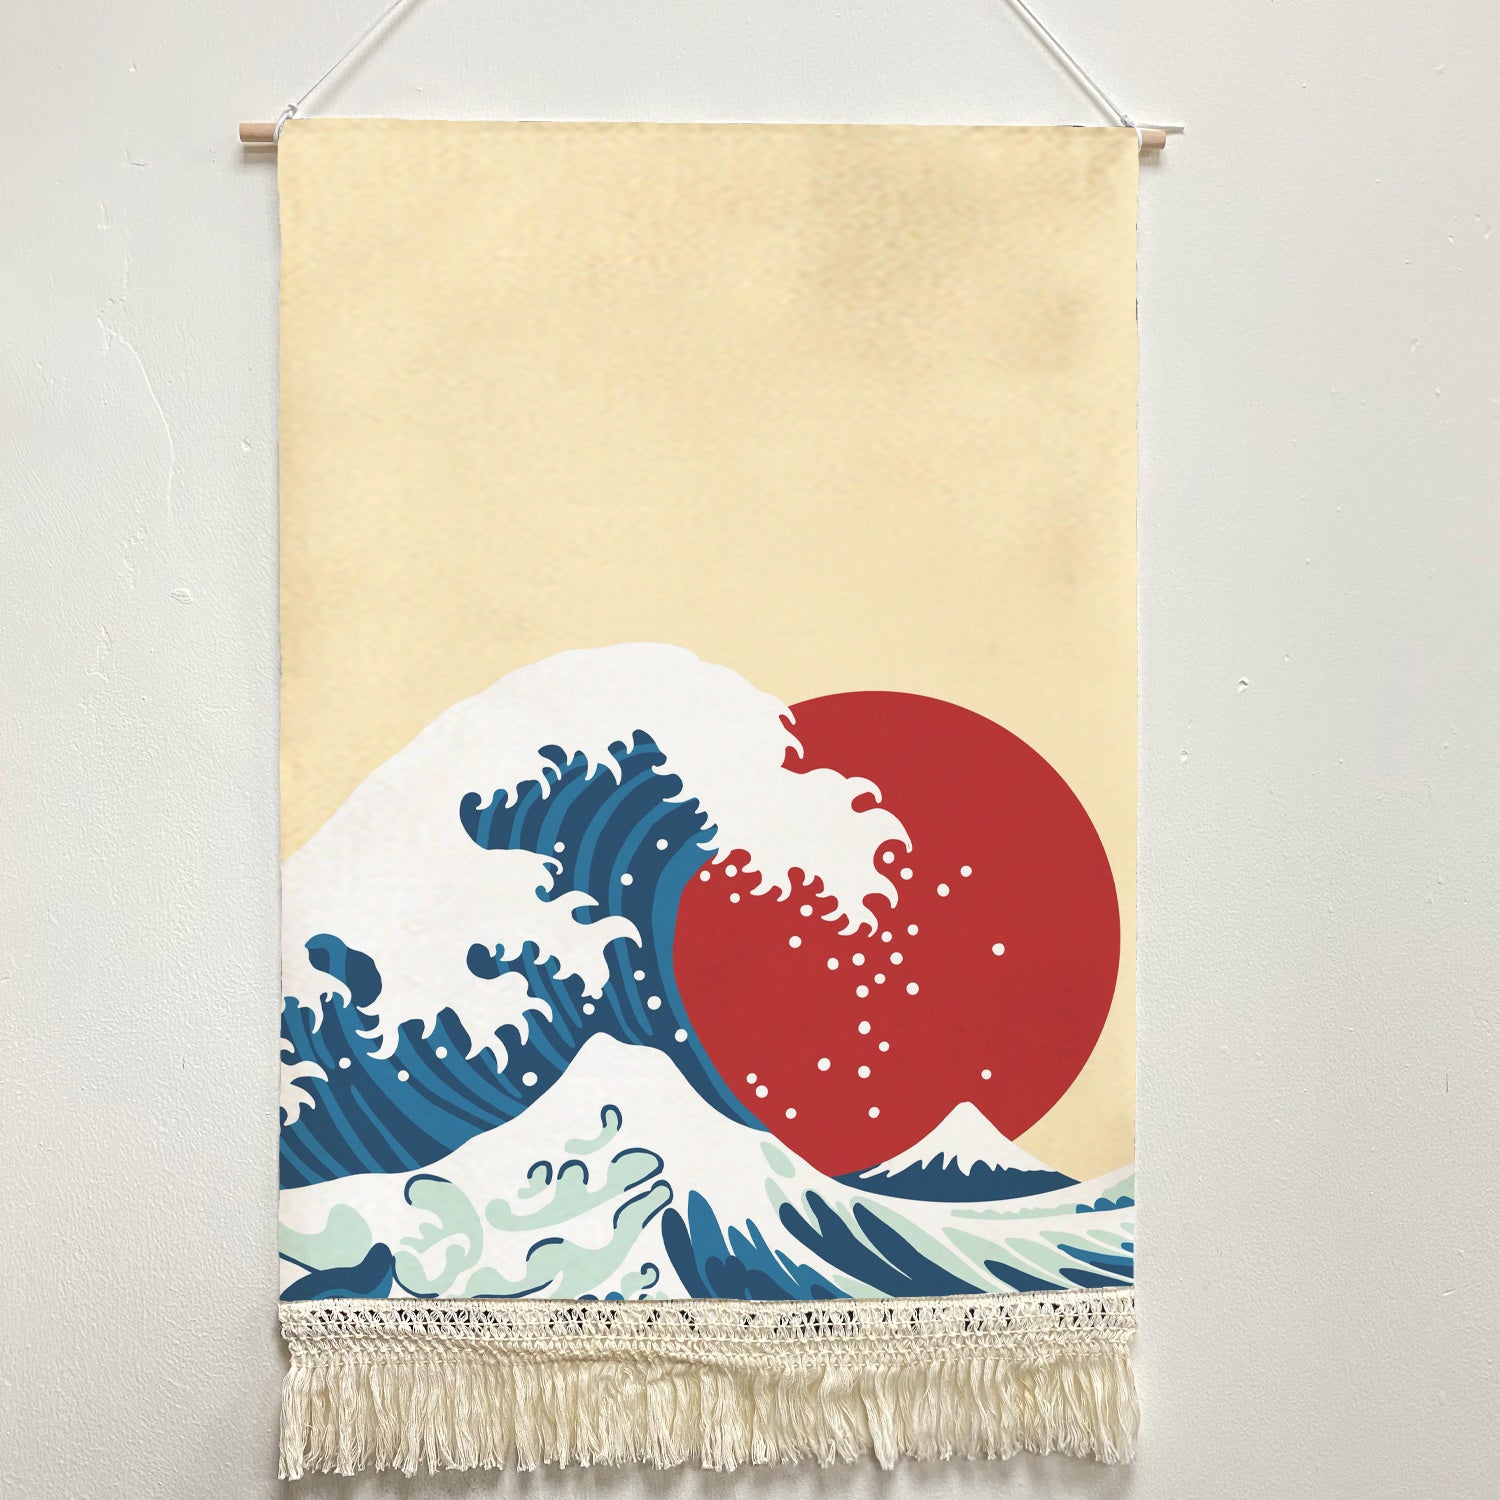 Feblilac Ukiyoe Waves Sunset Handmade Macrame Hanging Wall Decor Art, Woven Tapestry, Wall Decoration @Frank’s design